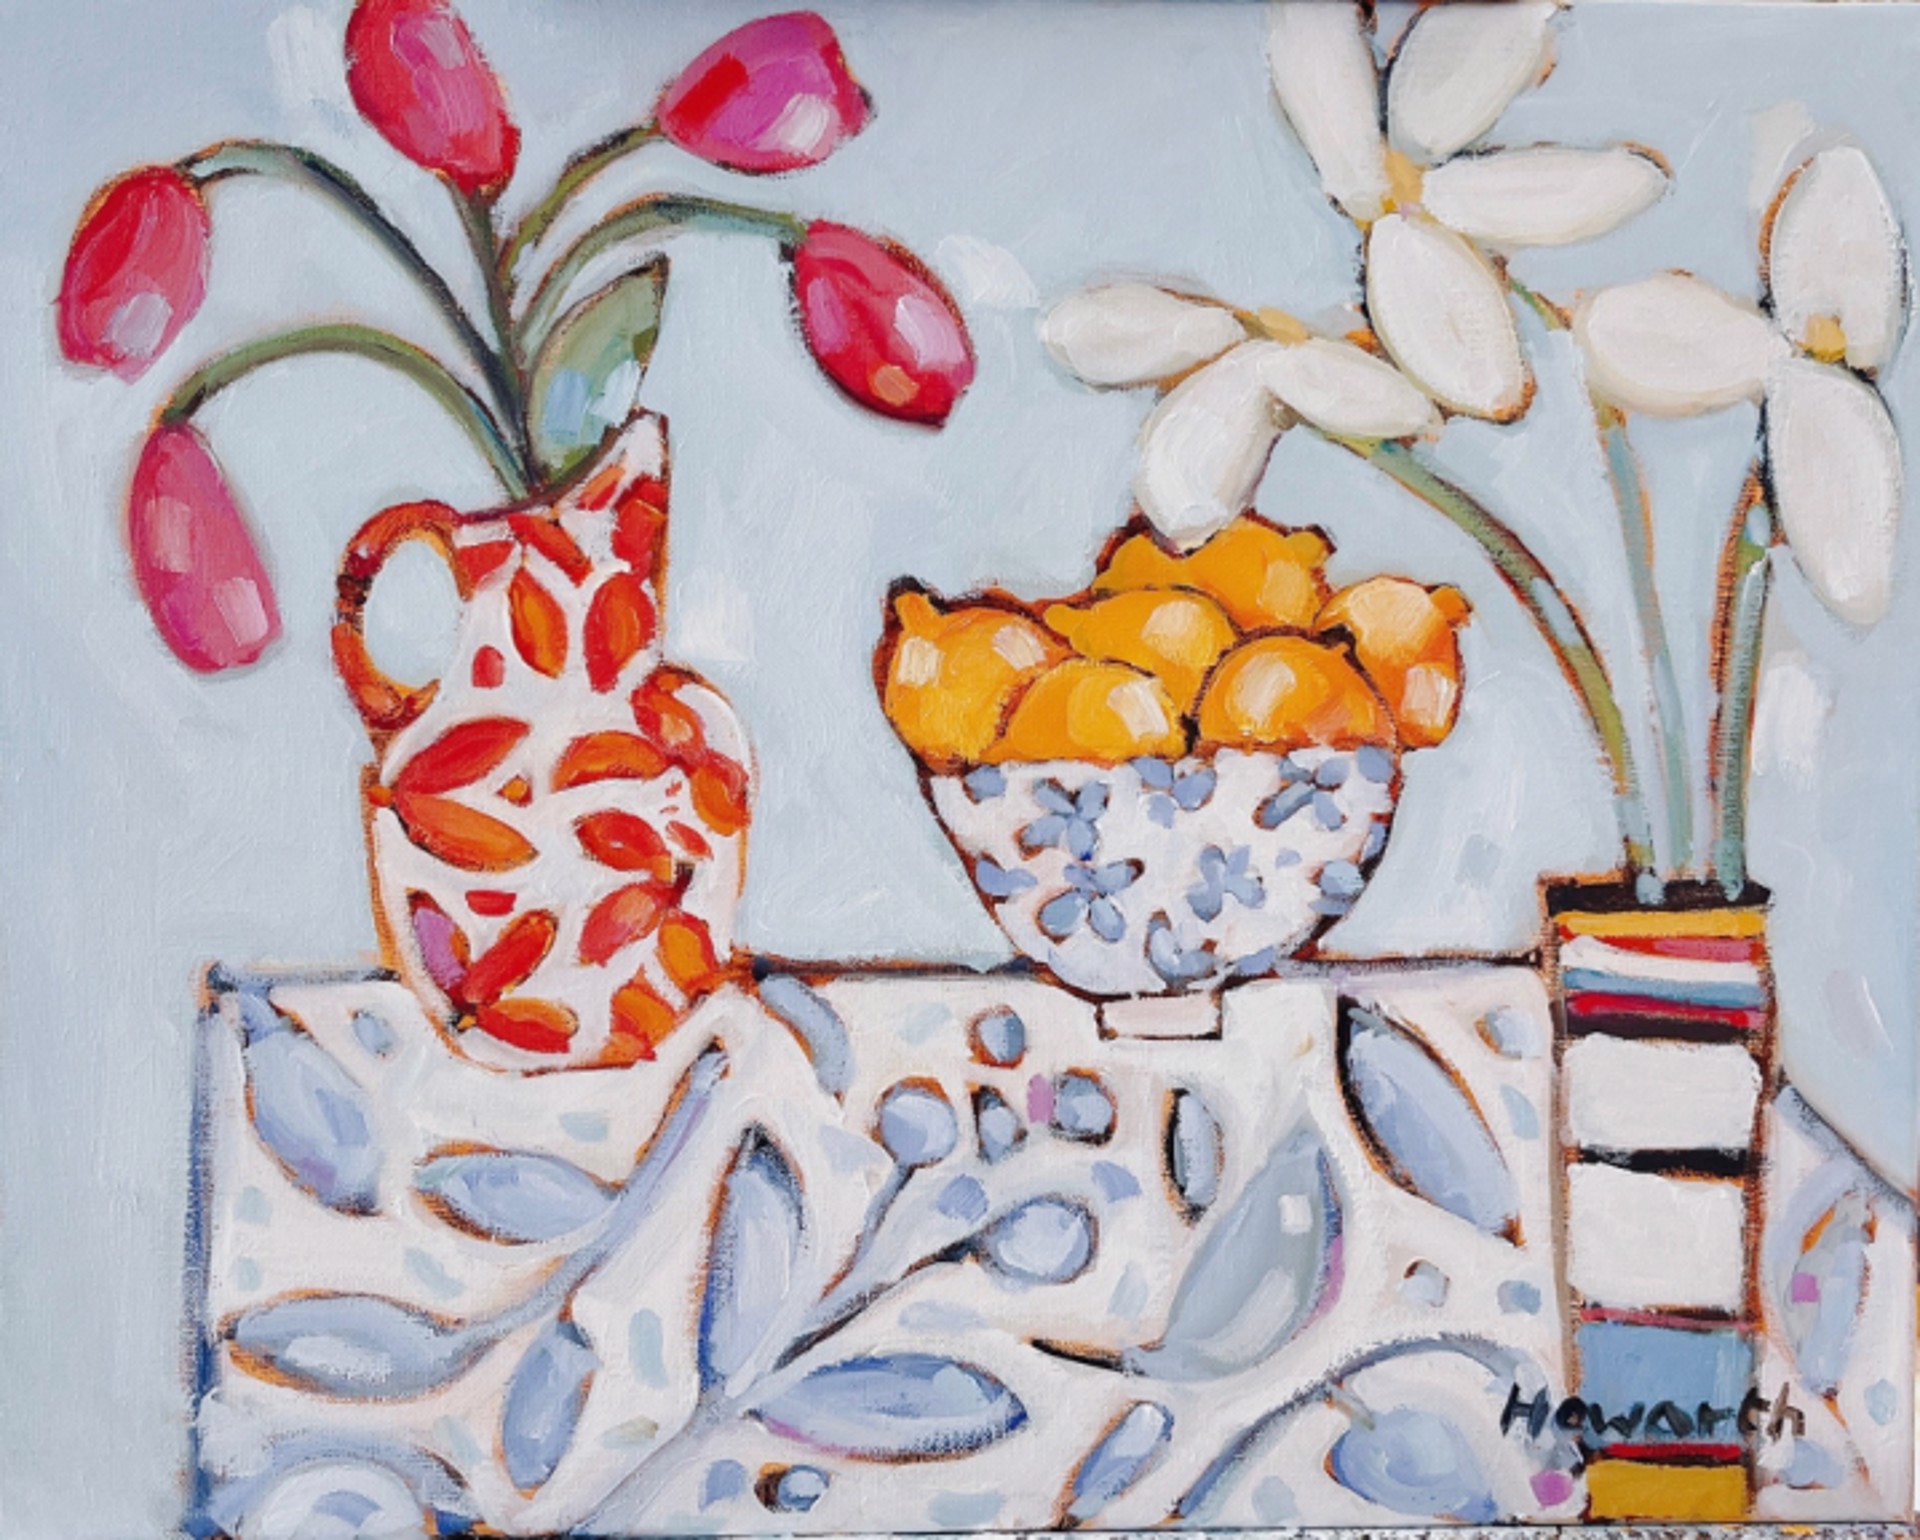 Lemons, Daisies, and Tulips by Katrina Howarth